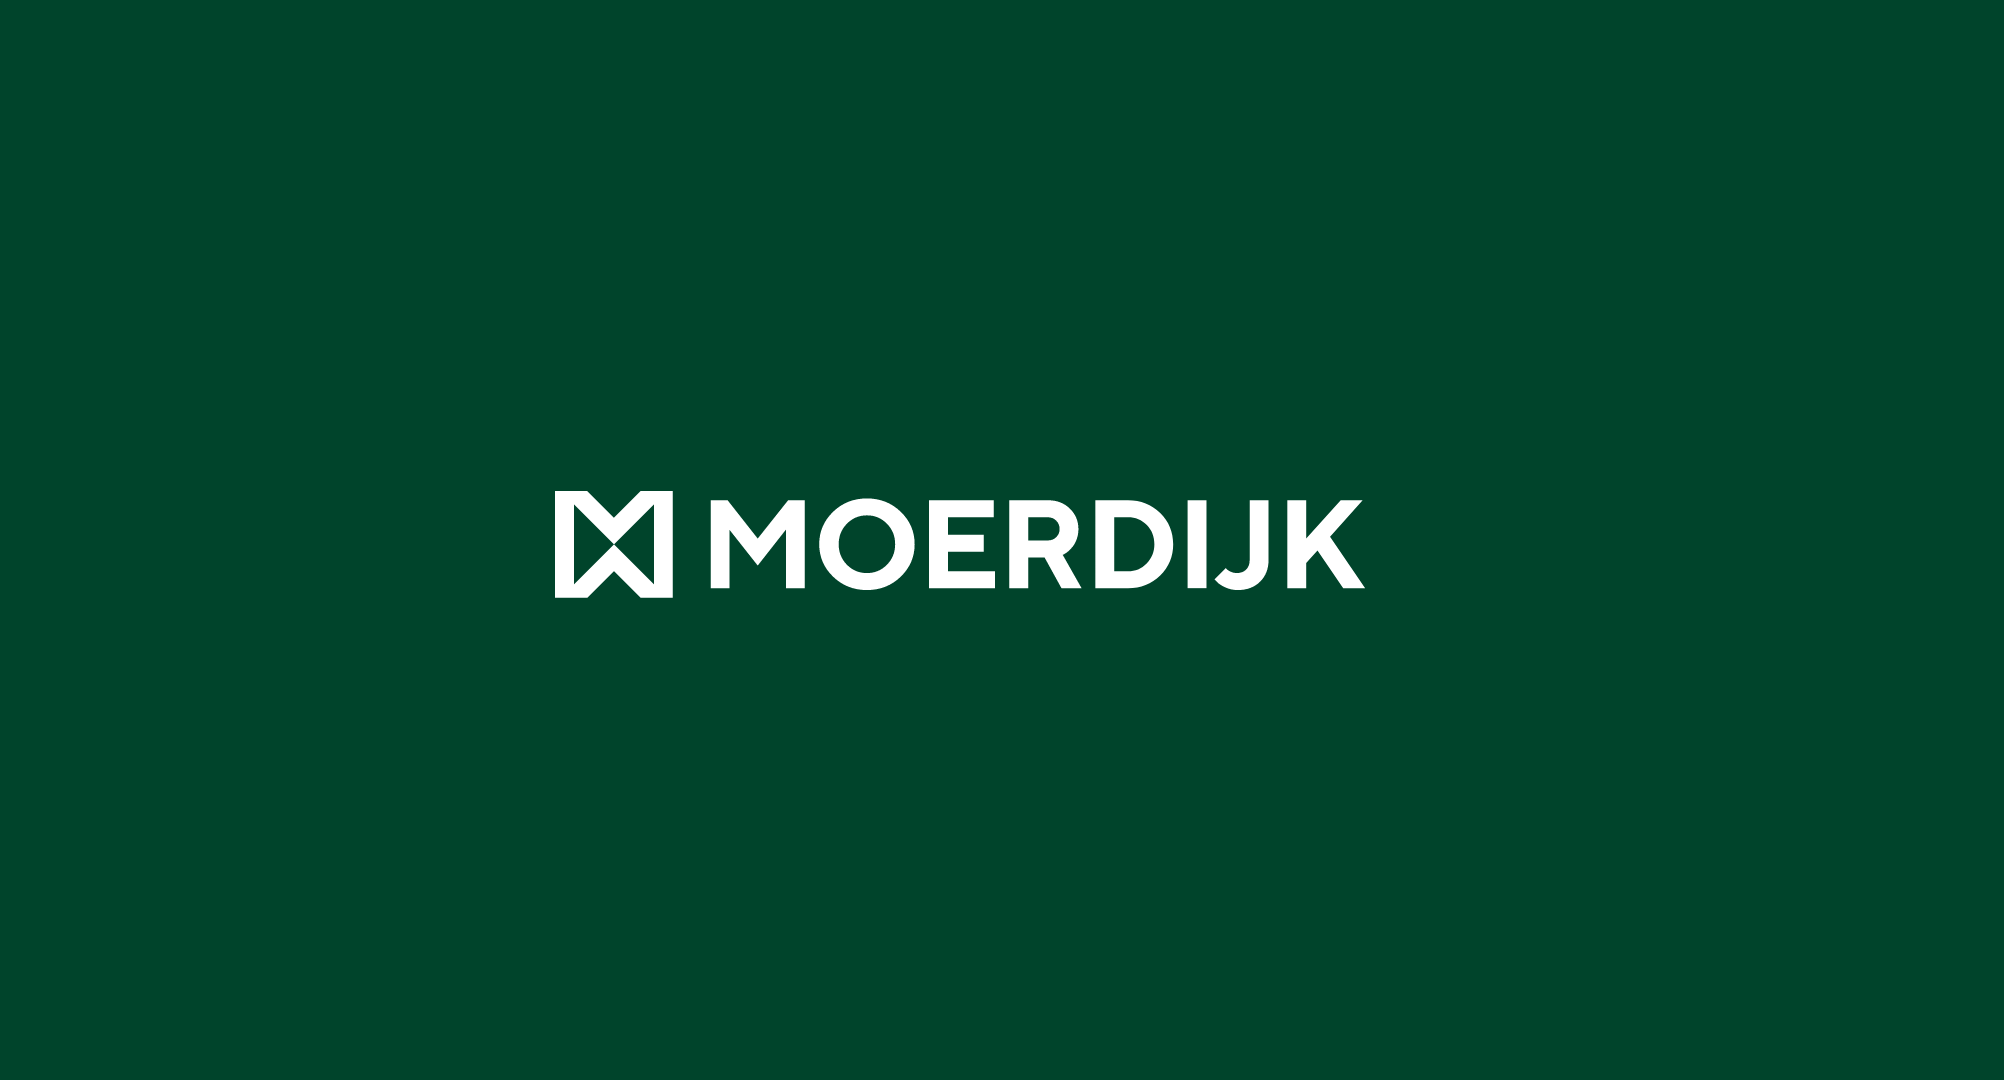 New logo of Gemeente Moerdjk